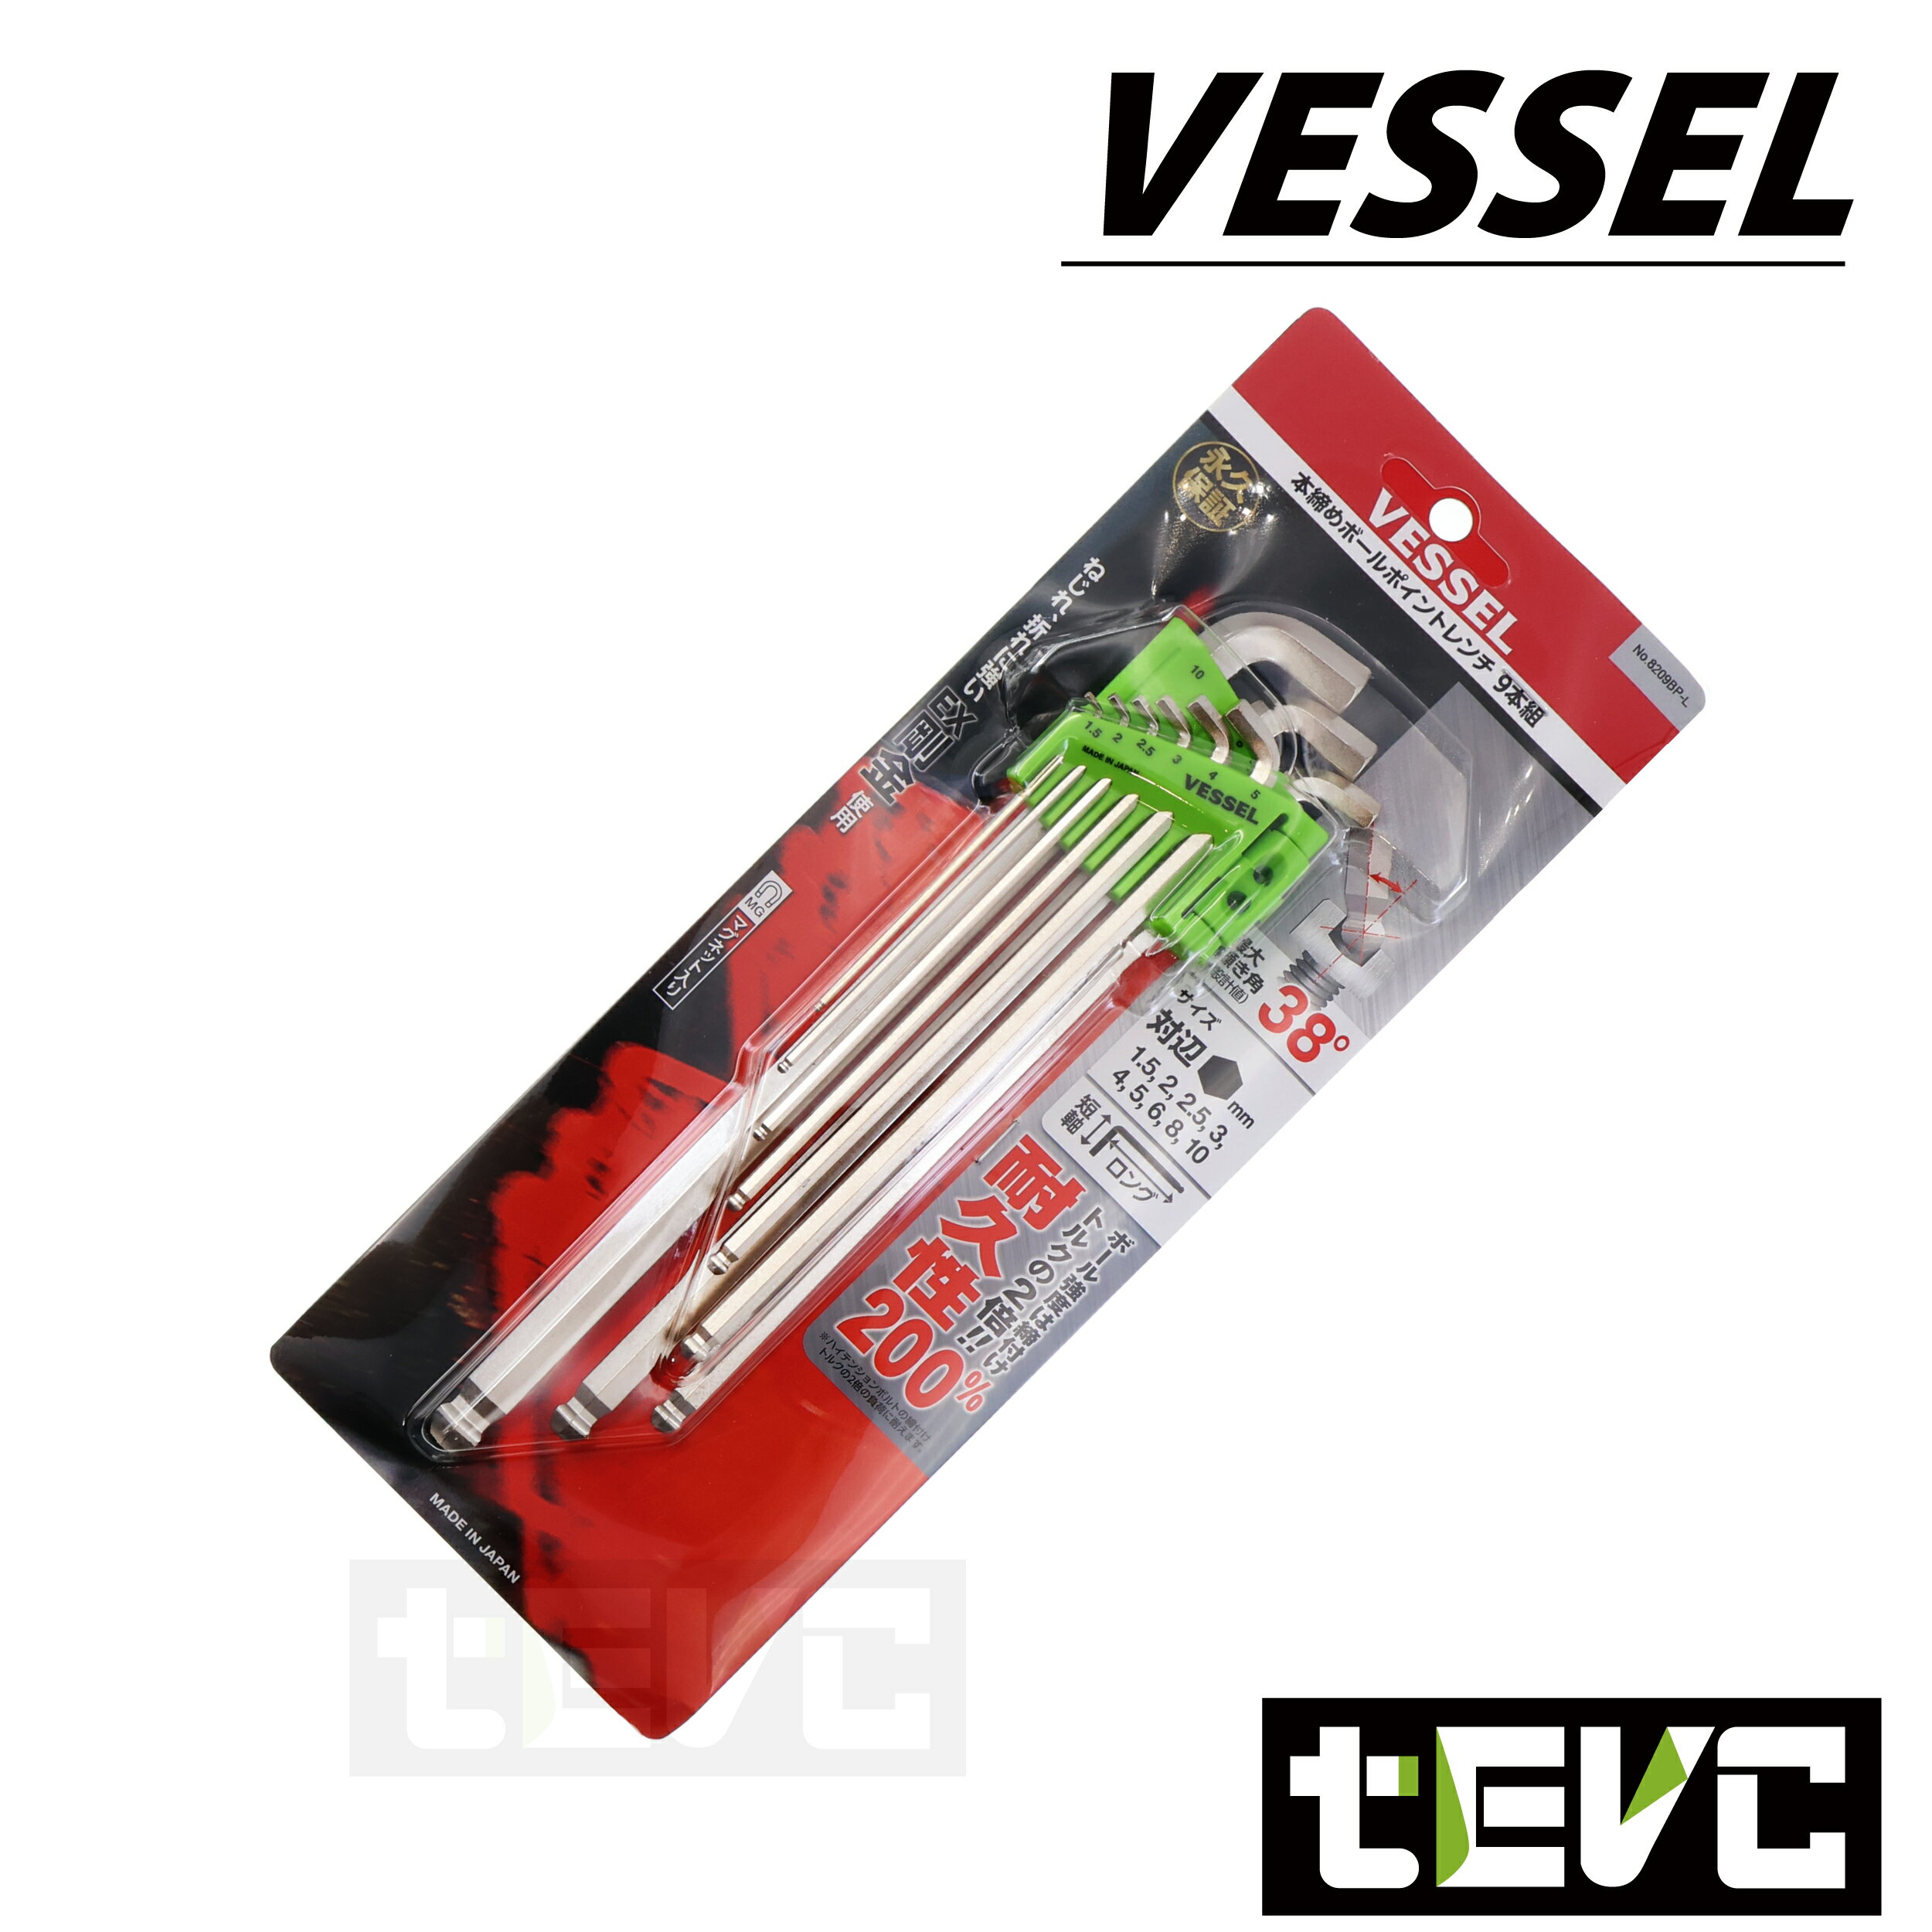 《tevc》日本 VESSEL 8309BP-L 內六角板手 9件組 球頭六角板手 球頭 L形扳手 六角 T122